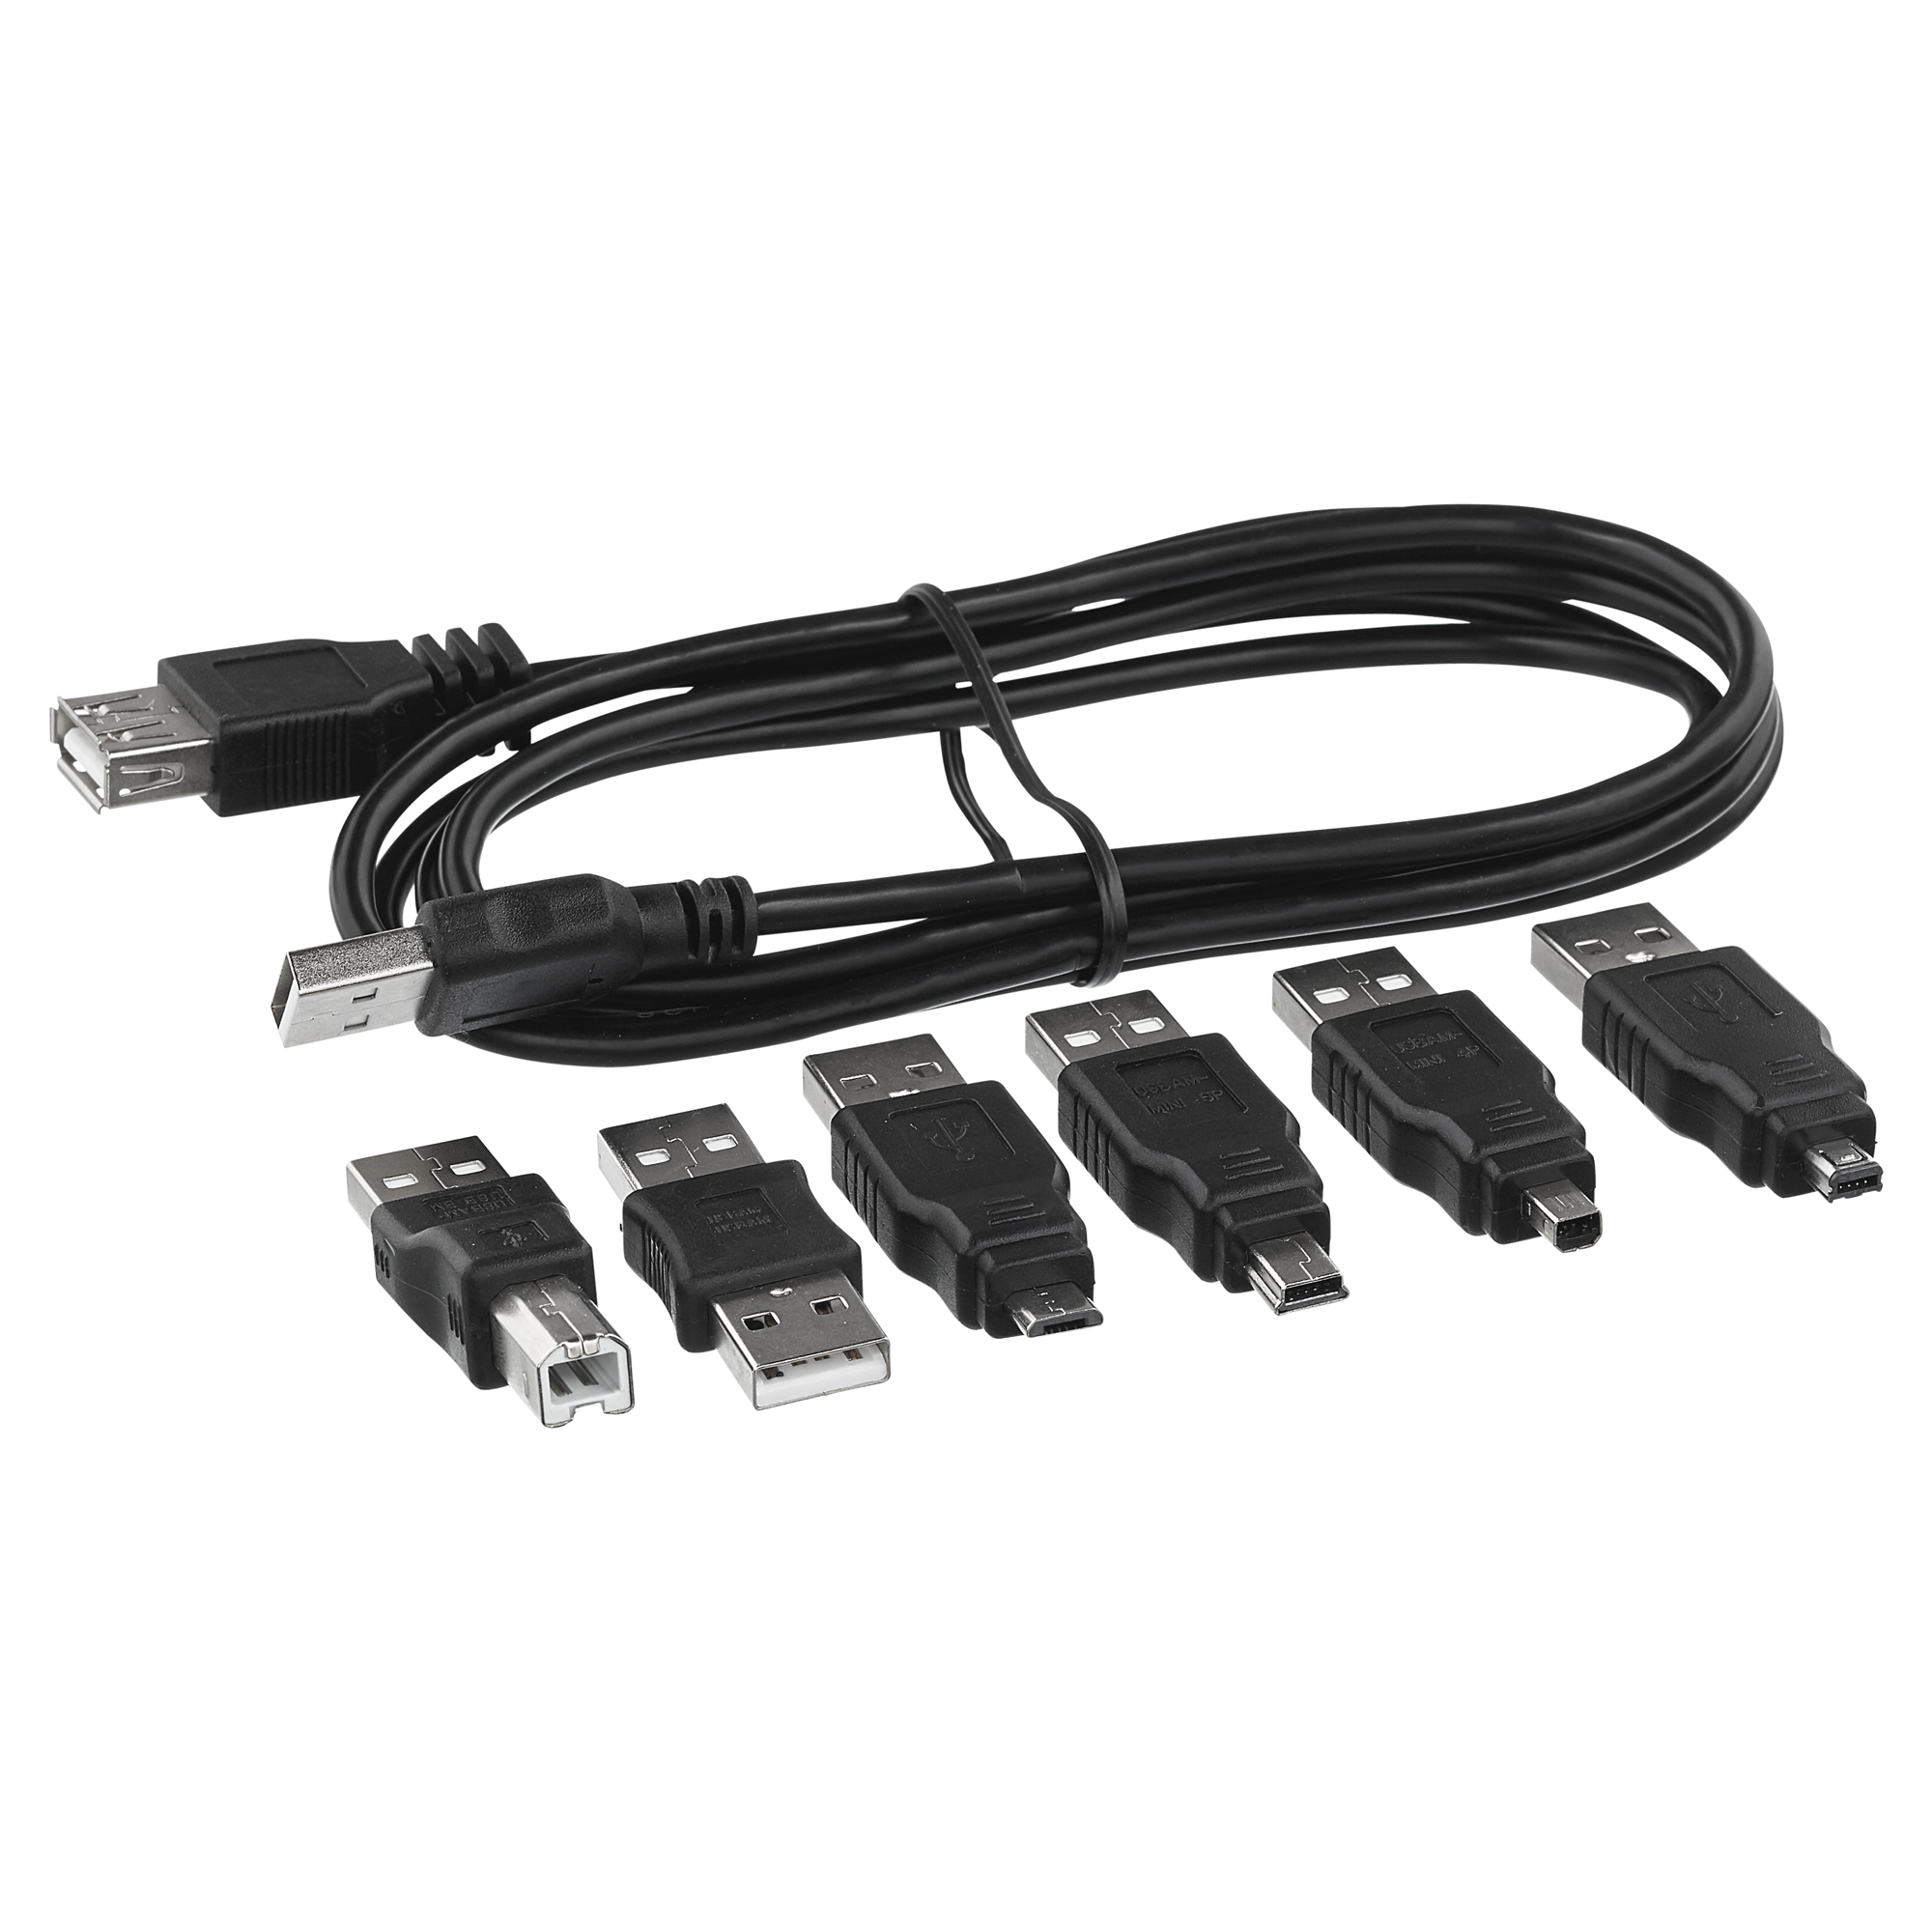 050335 | ST 760+ Gerätetester Set VDE 0701 / 0702 / 0751/0544-4 Prüfgerät,  USB, WLAN